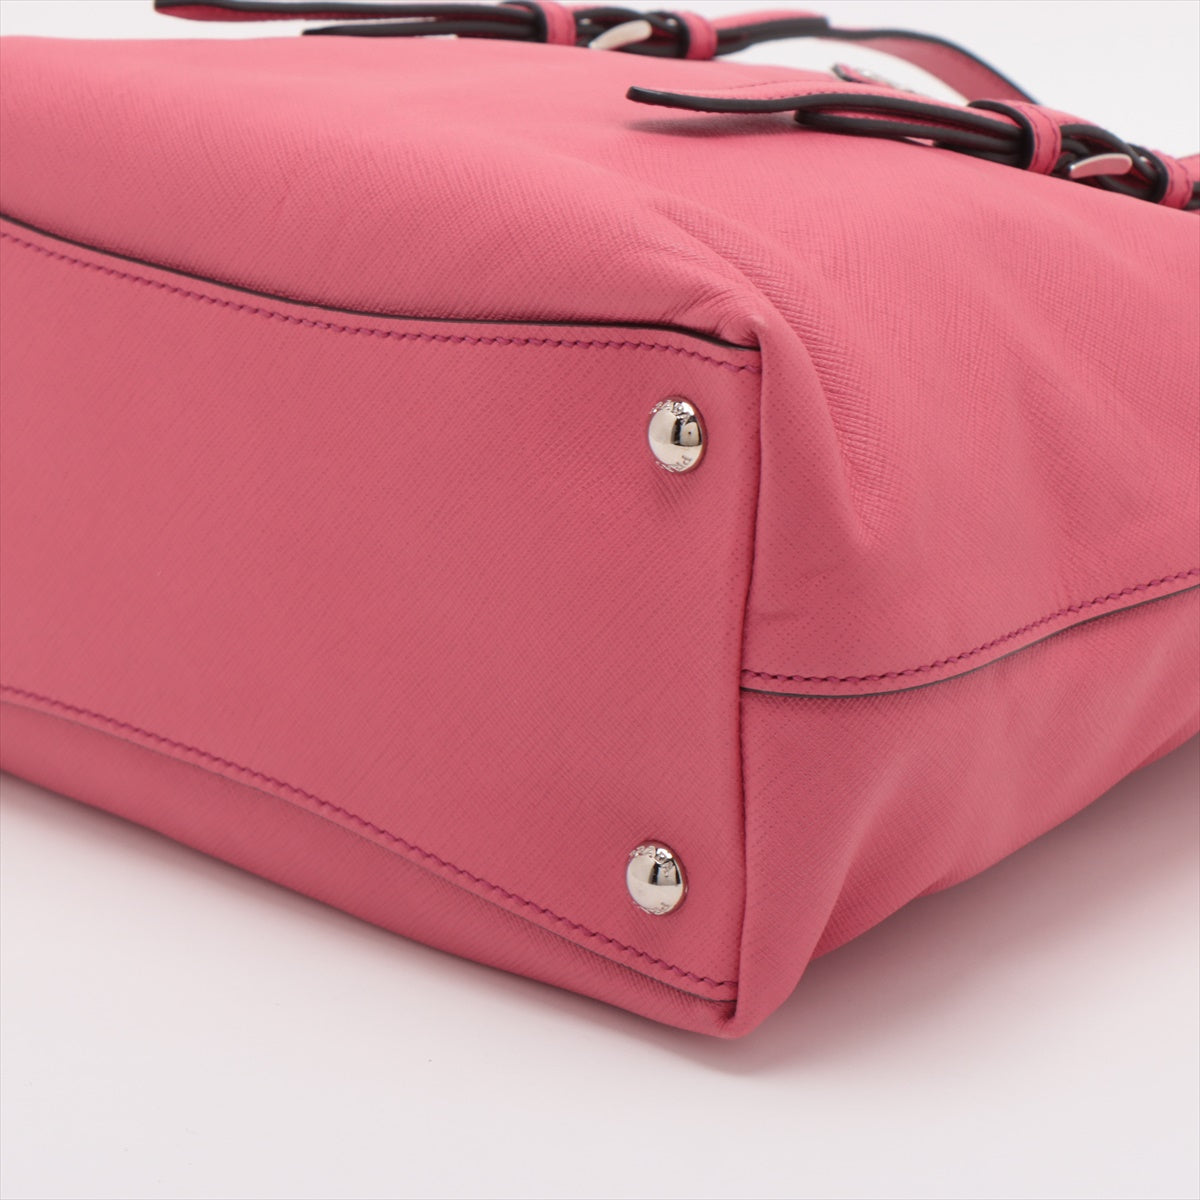 Prada Sapphire Leather Tote Bag Pink